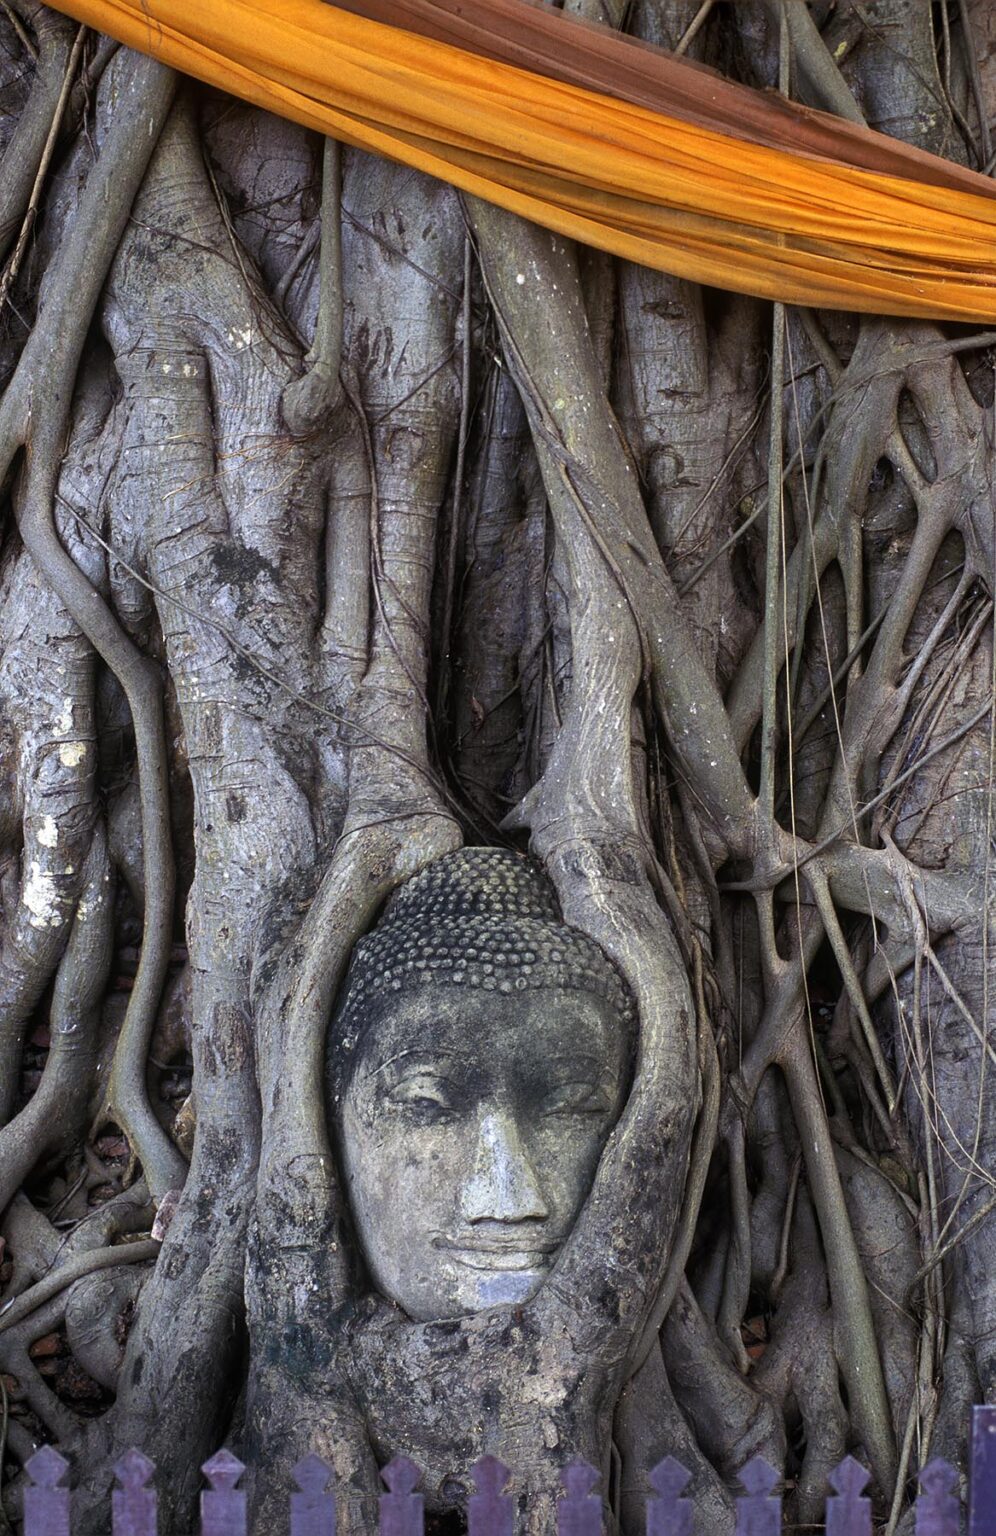 BUDDHA HEAD embedded in a BANYAN TREE at WAT MAHATHAT built in 1374 AD by King Boromaraja - AYUTTHAYA, THAILAND